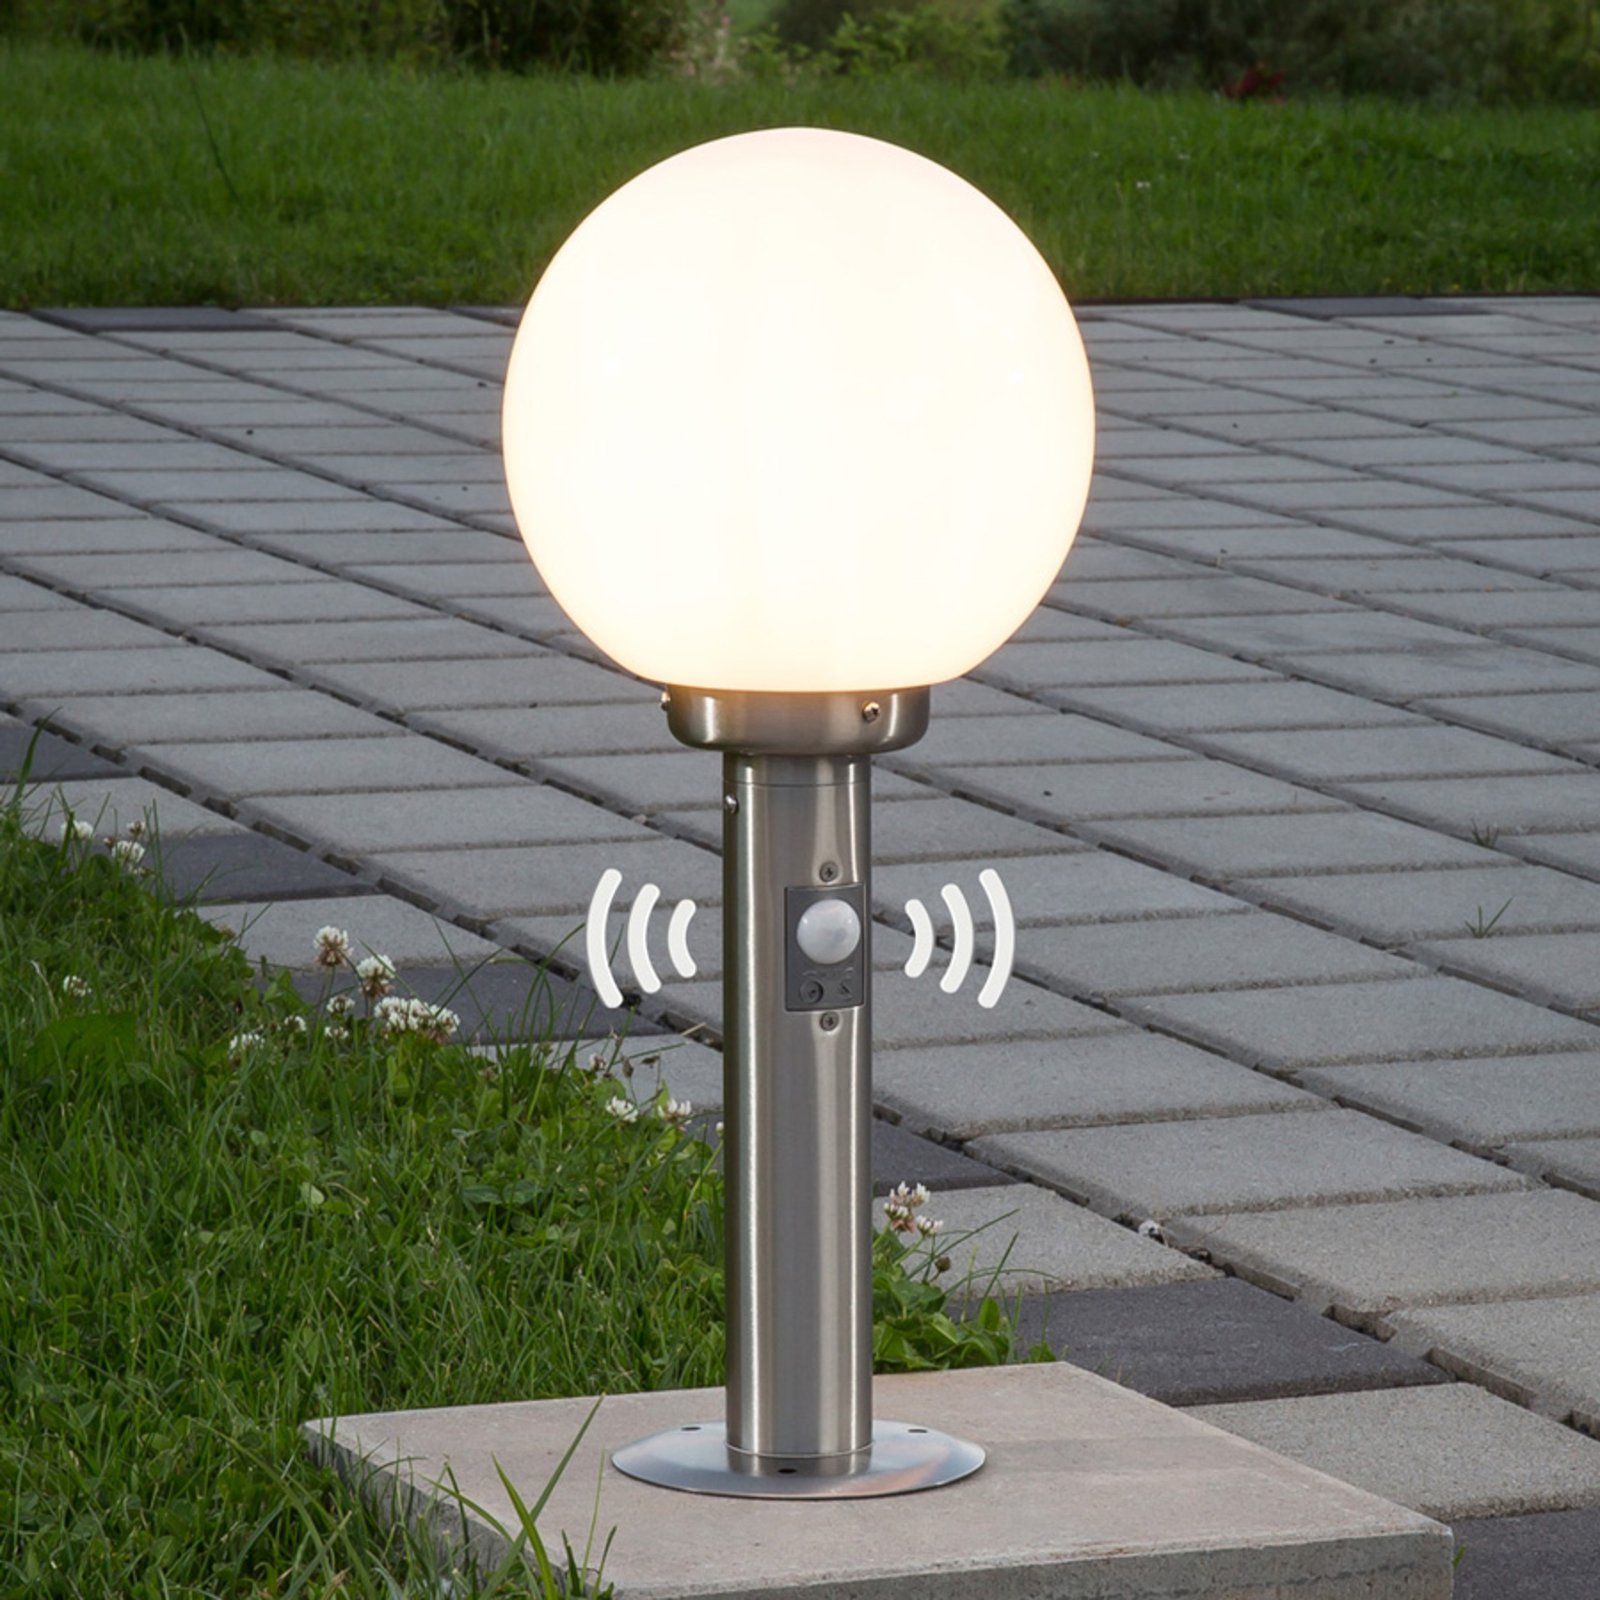 Vedran pillar lamp with motion detector